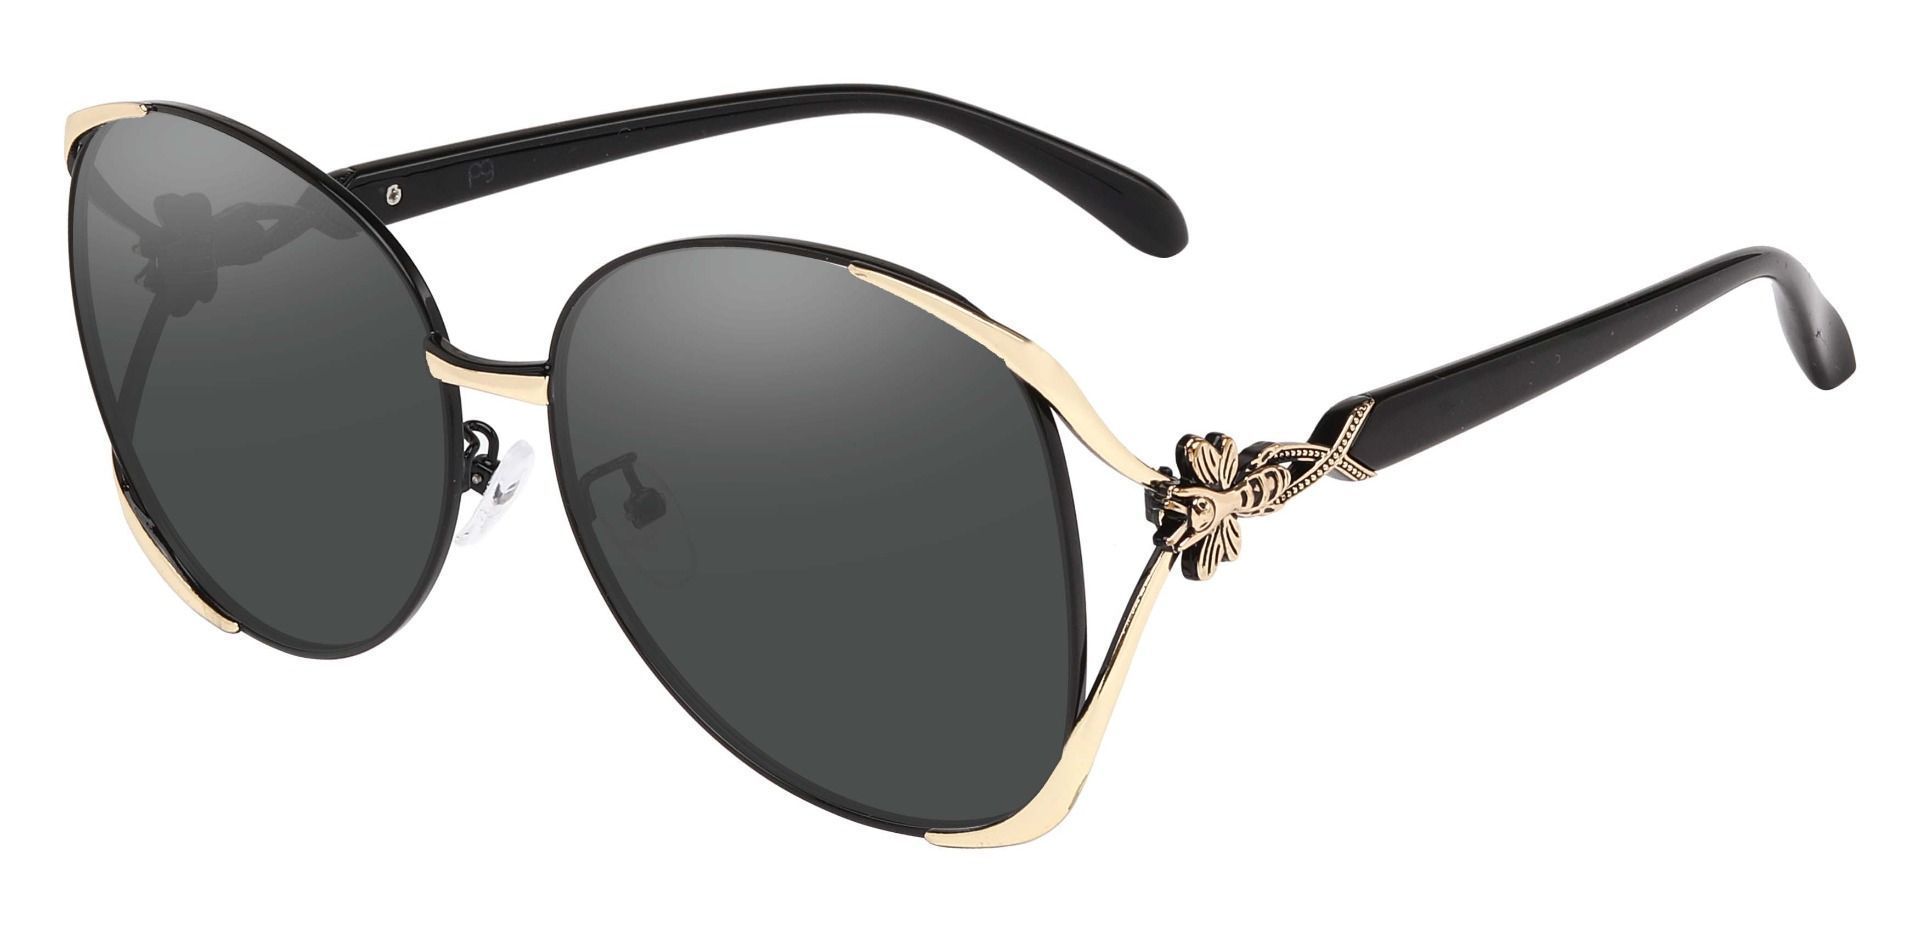 Nina Round Single Vision Sunglasses - Black Frame With Gray Lenses